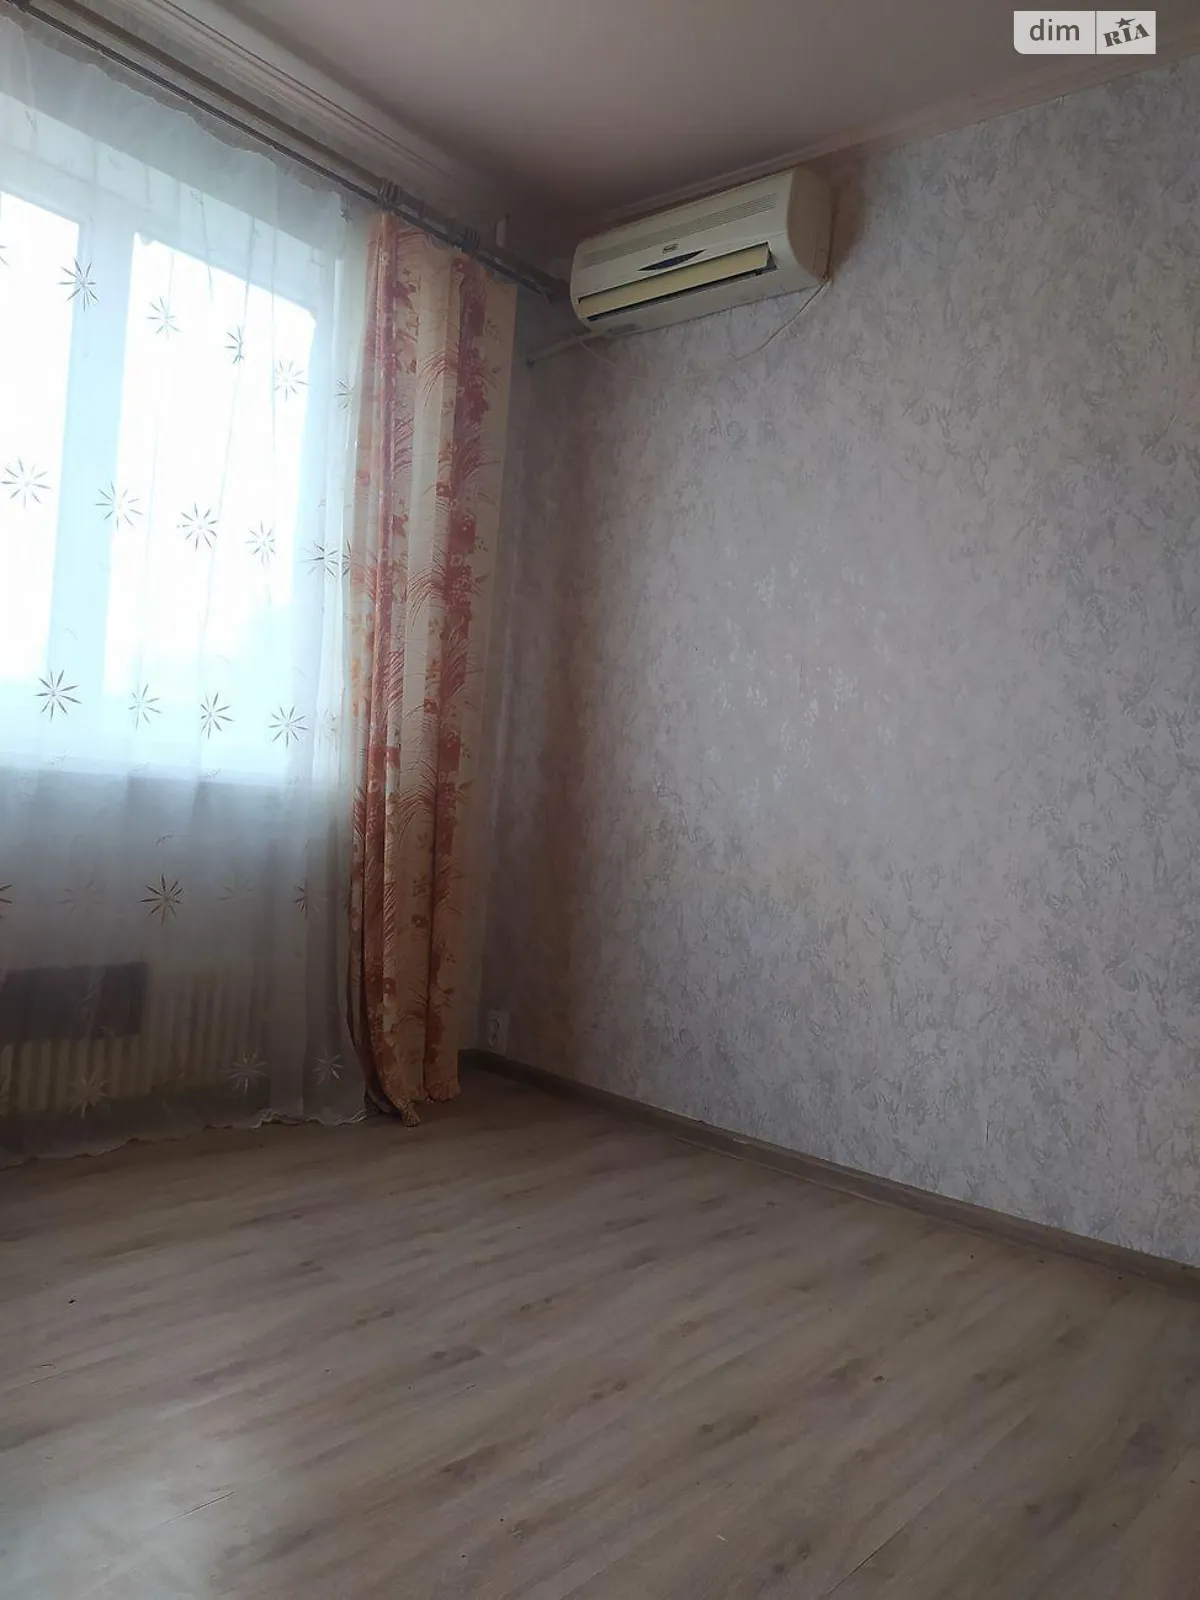 Продается комната 21 кв. м в Харькове - фото 2